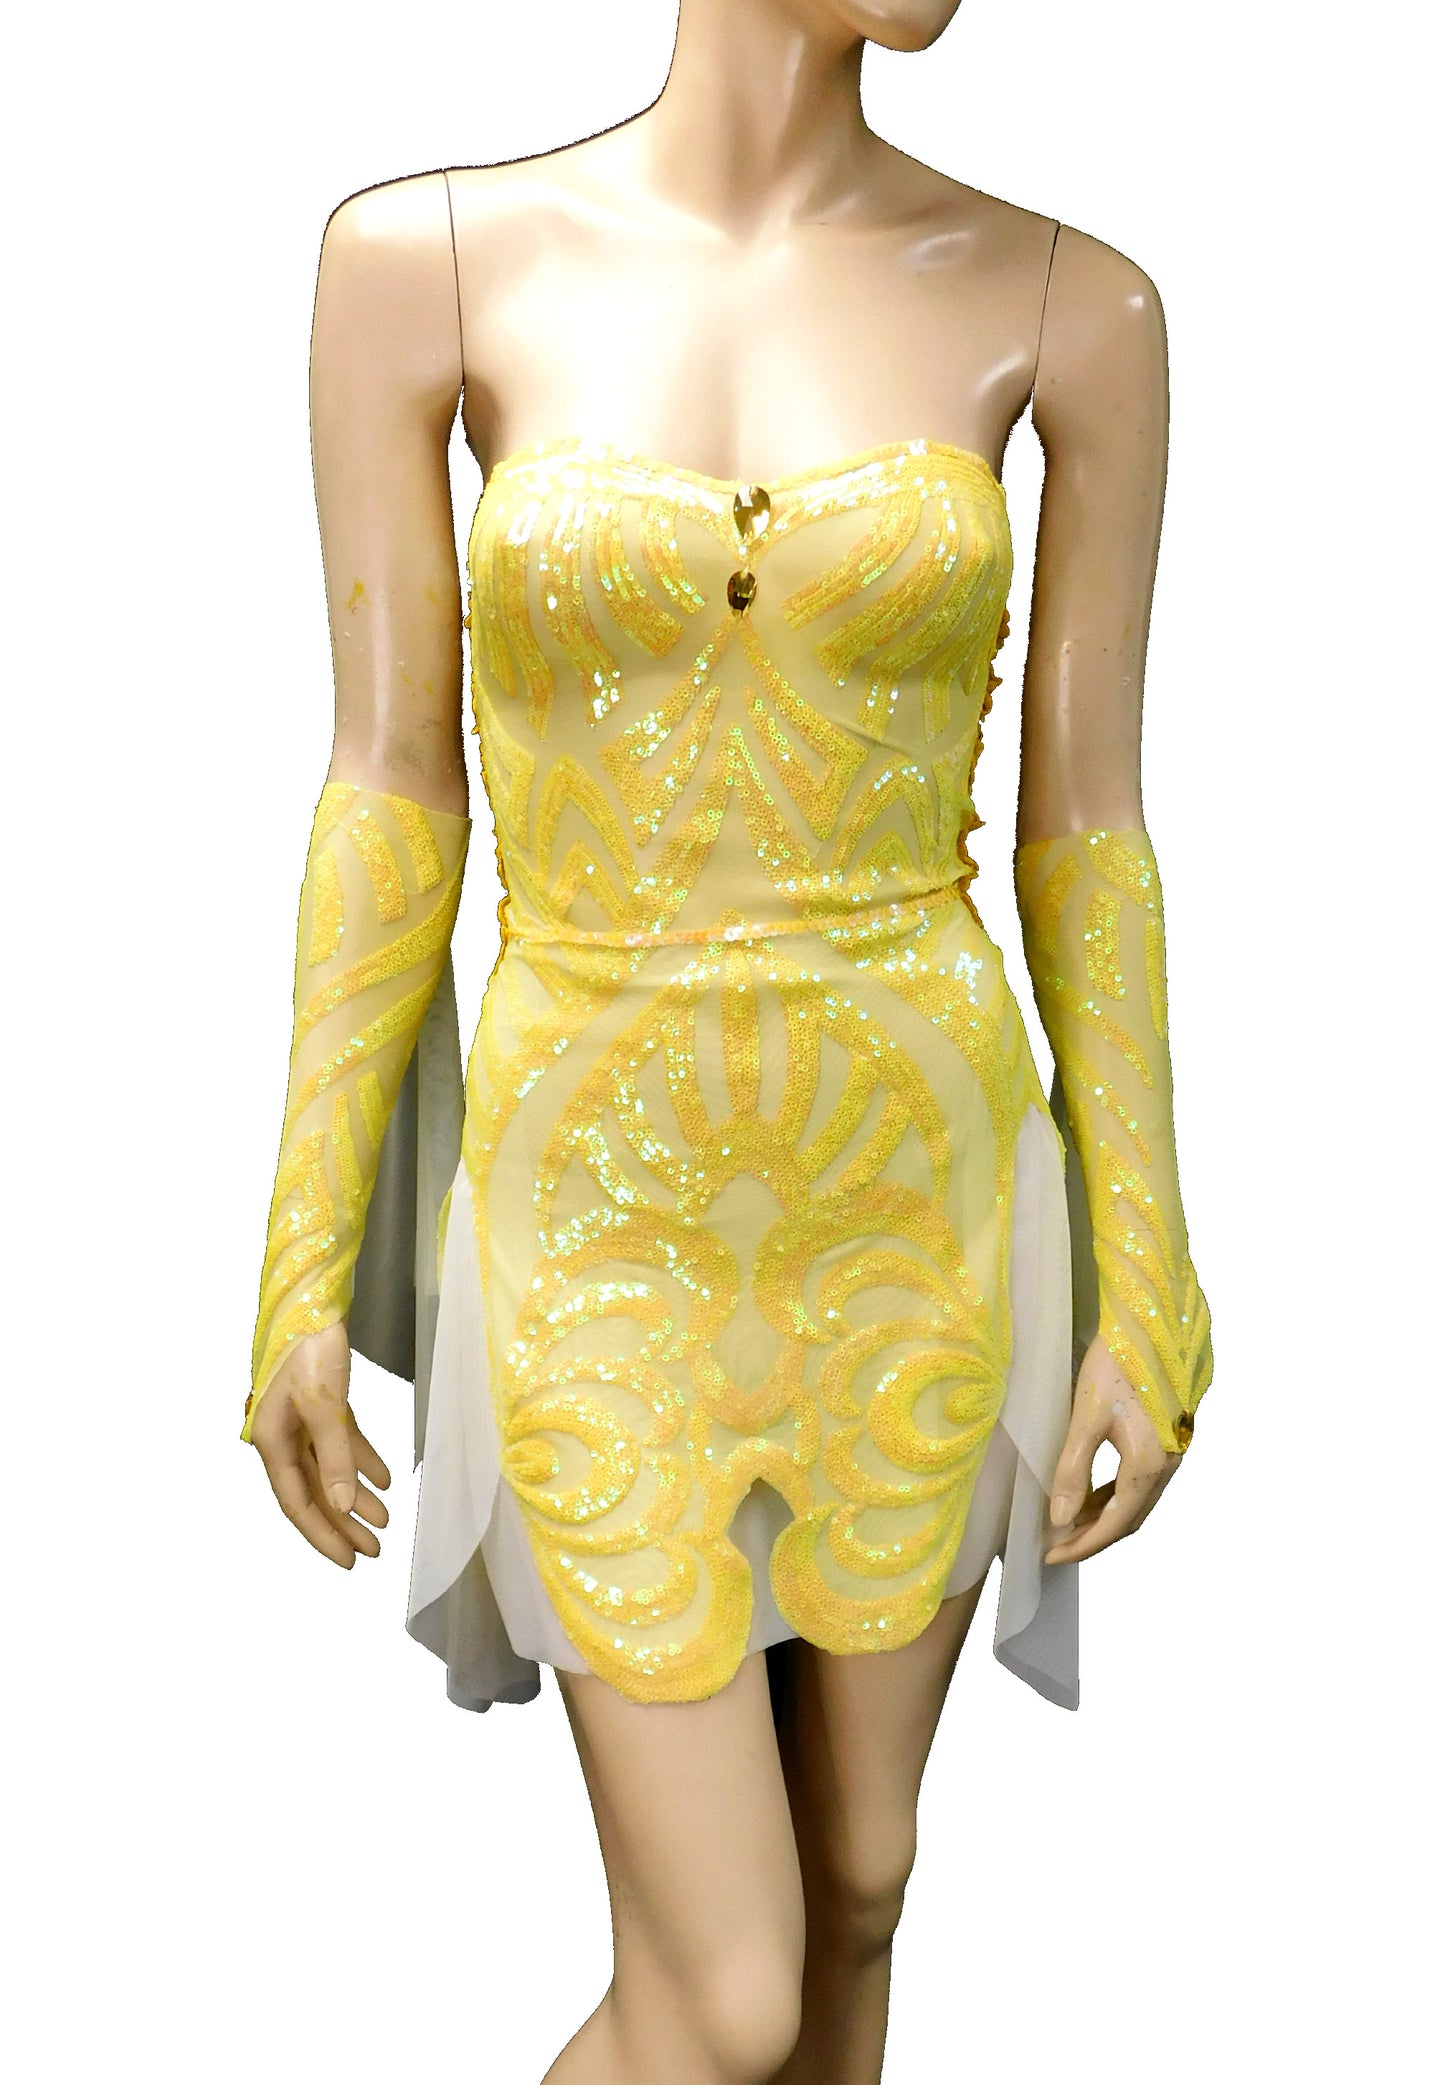 Sunny Yellow Iridescent Sequins Goddess Fairy Dress Dance Festival